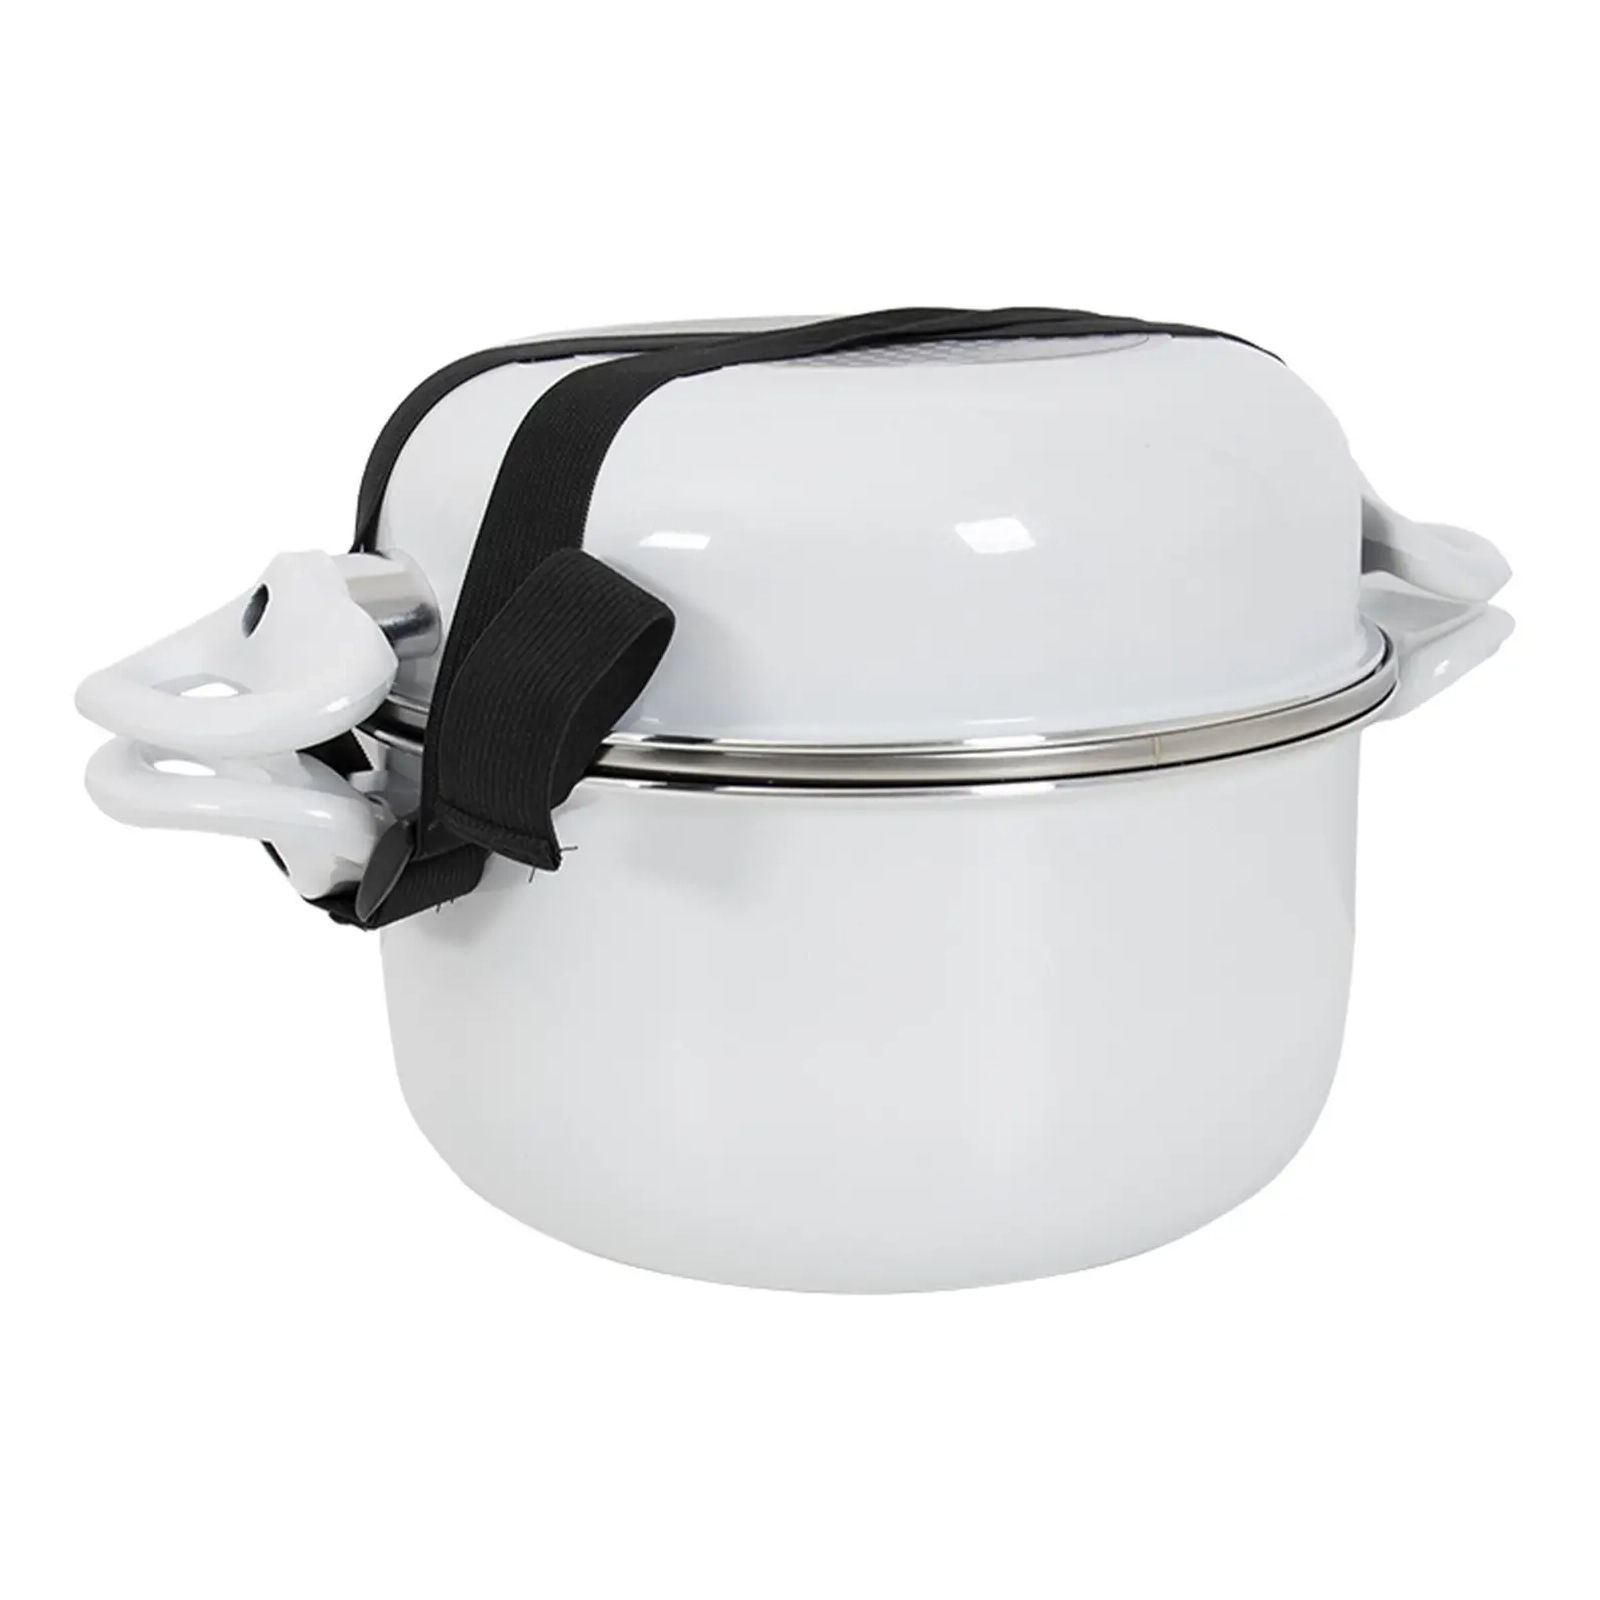 Набор посуды Gimex Cookware Set induction 7 предметів White (6977221) изображение 2